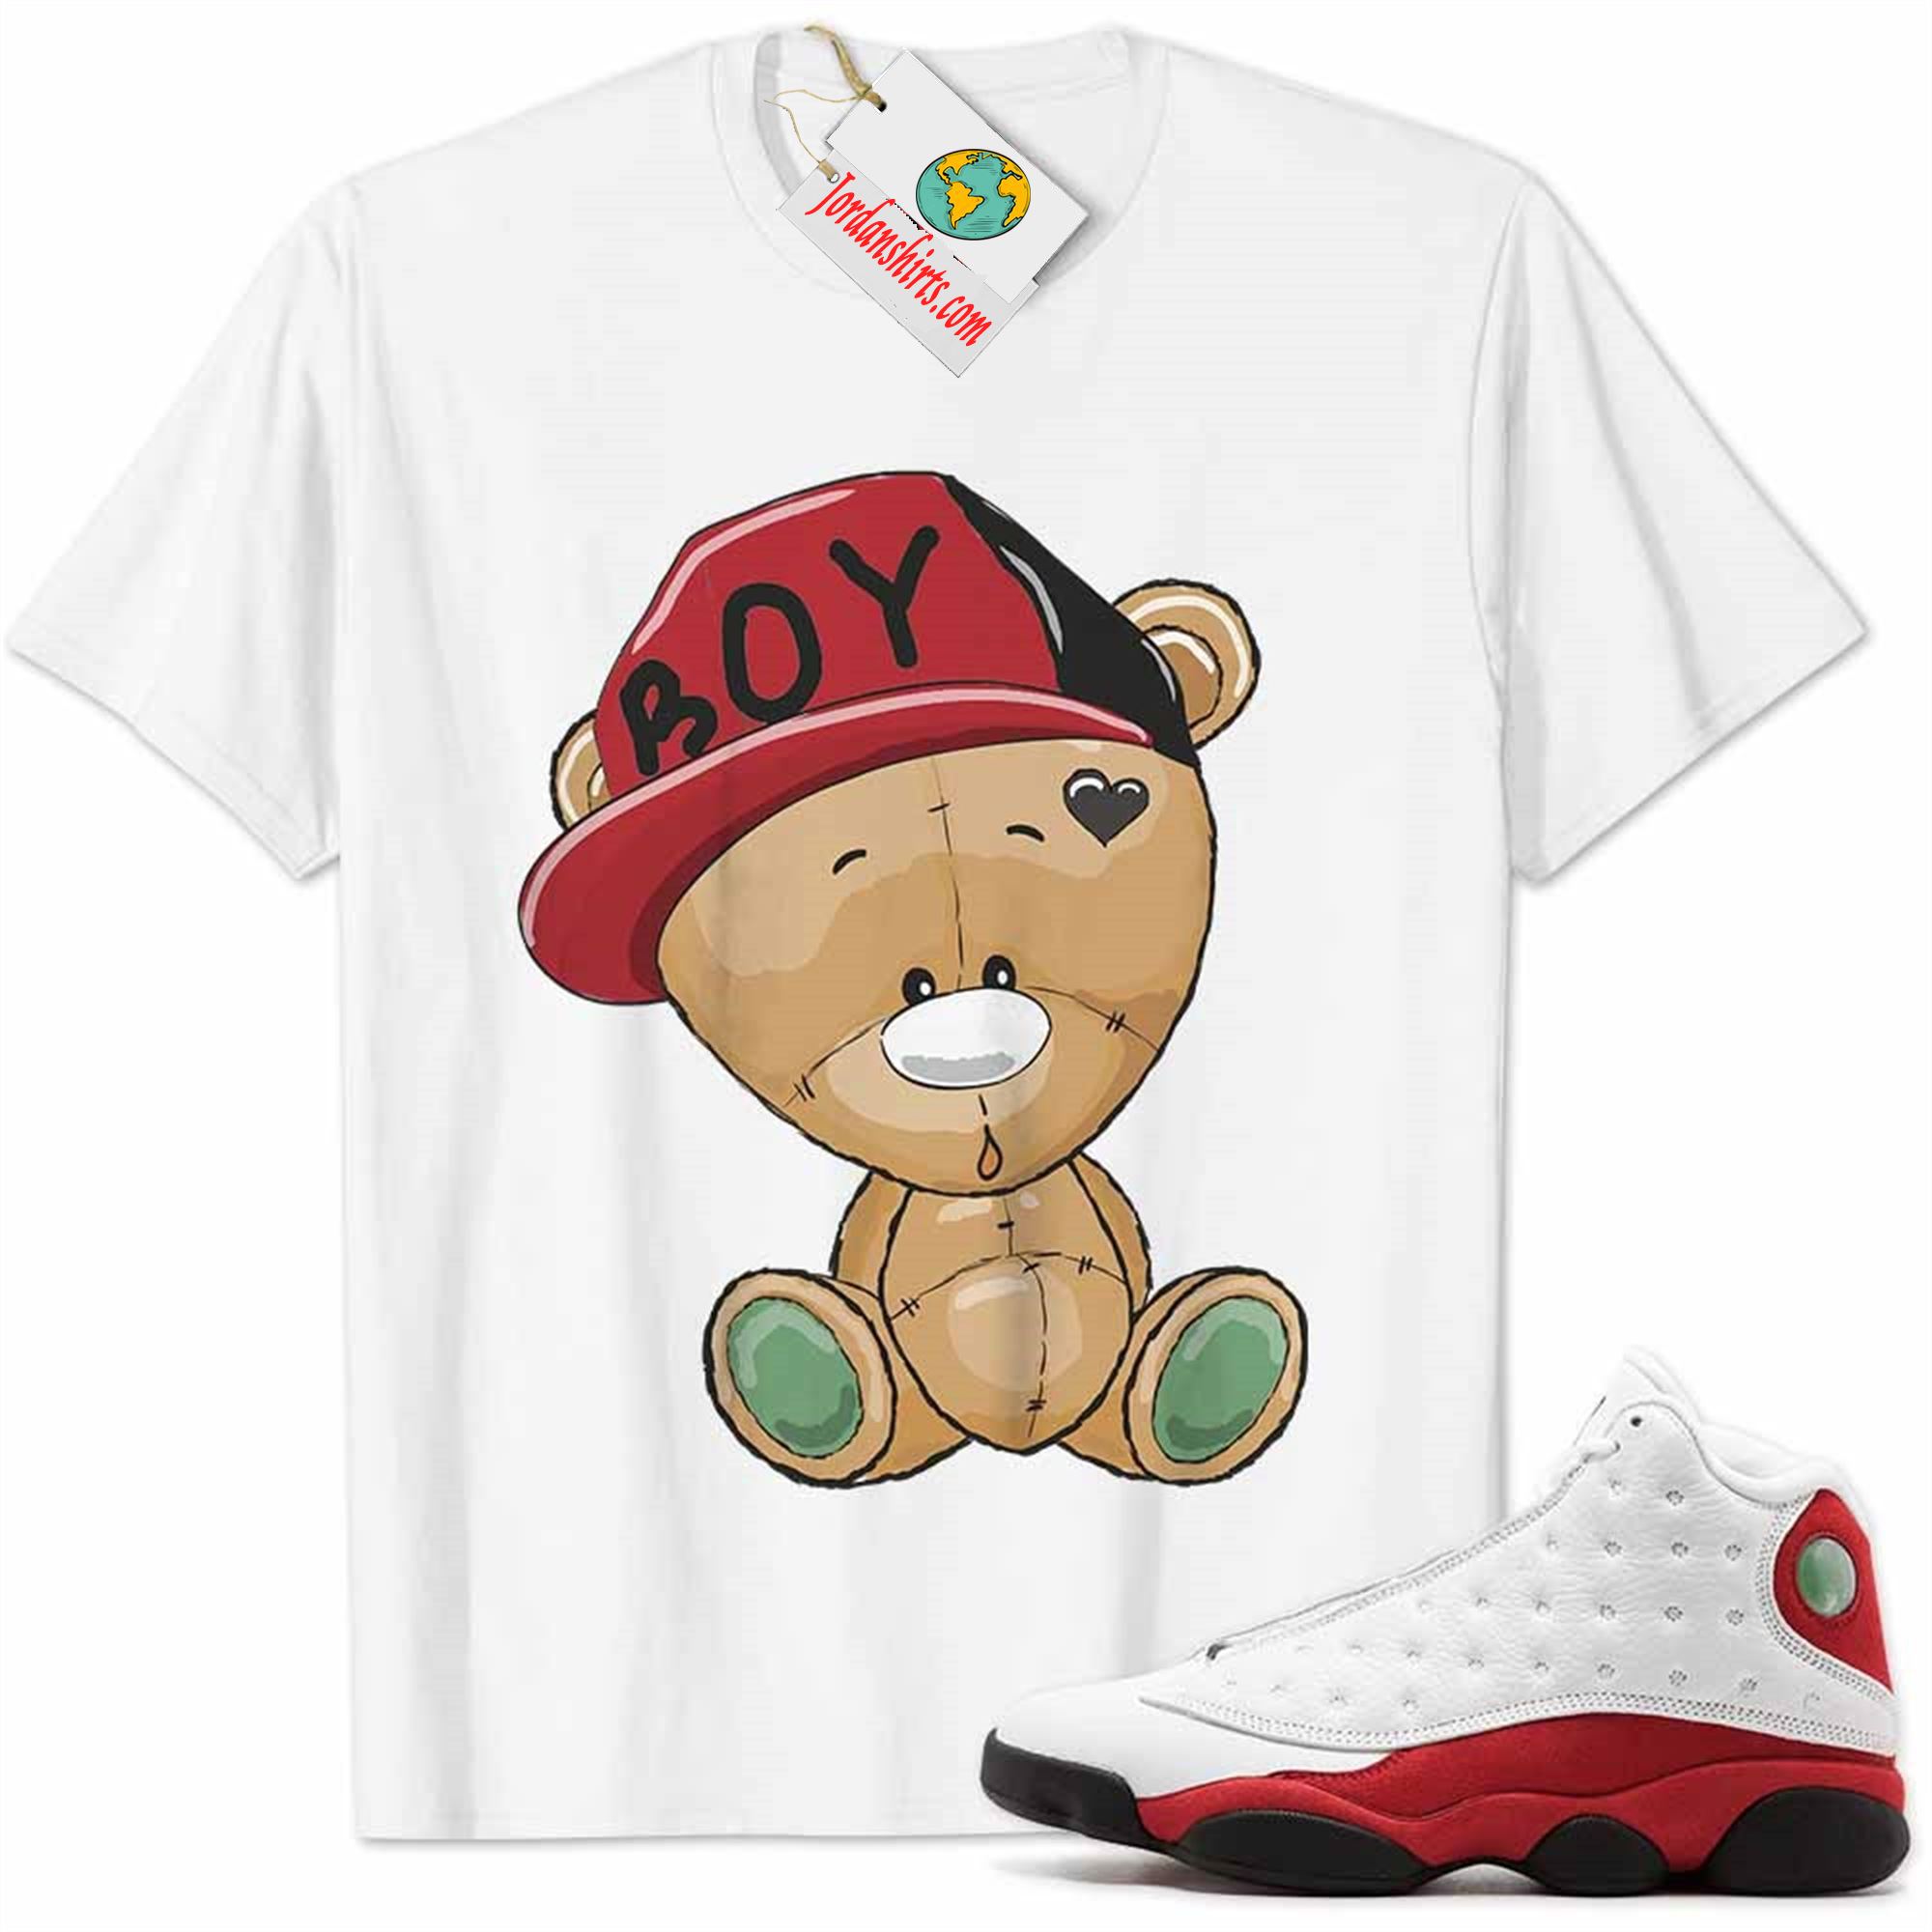 Jordan 13 Shirt, Jordan 13 Chicago Shirt Cute Baby Teddy Bear White Plus Size Up To 5xl